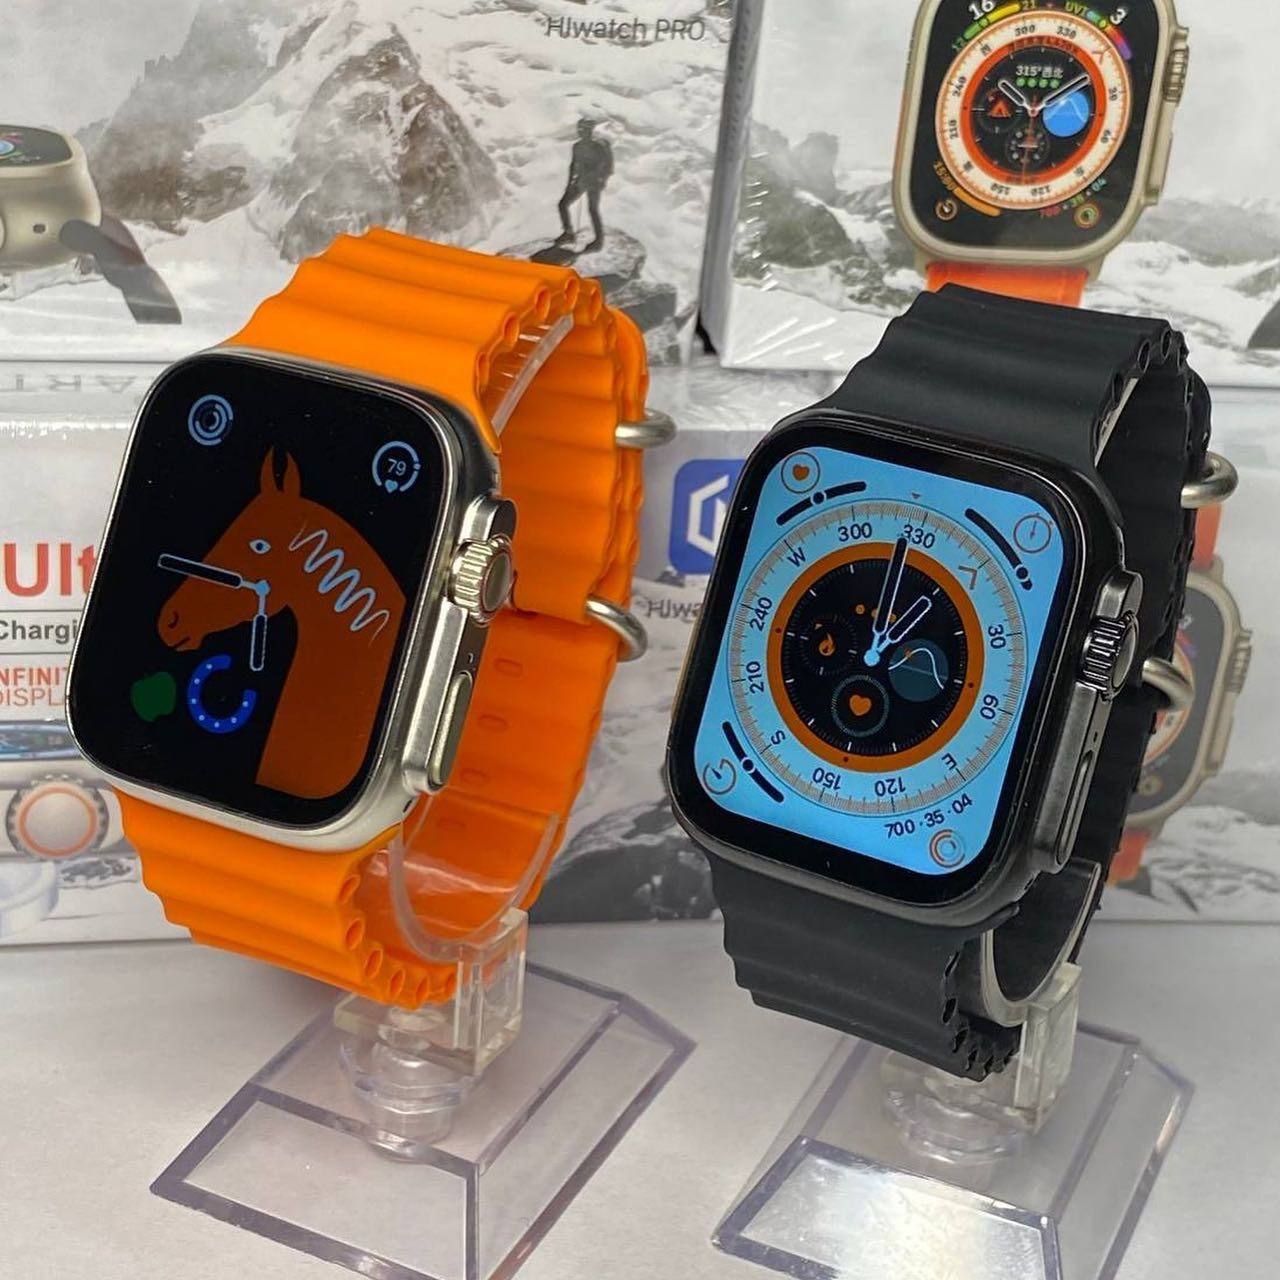 Iwatch T800, smart watch